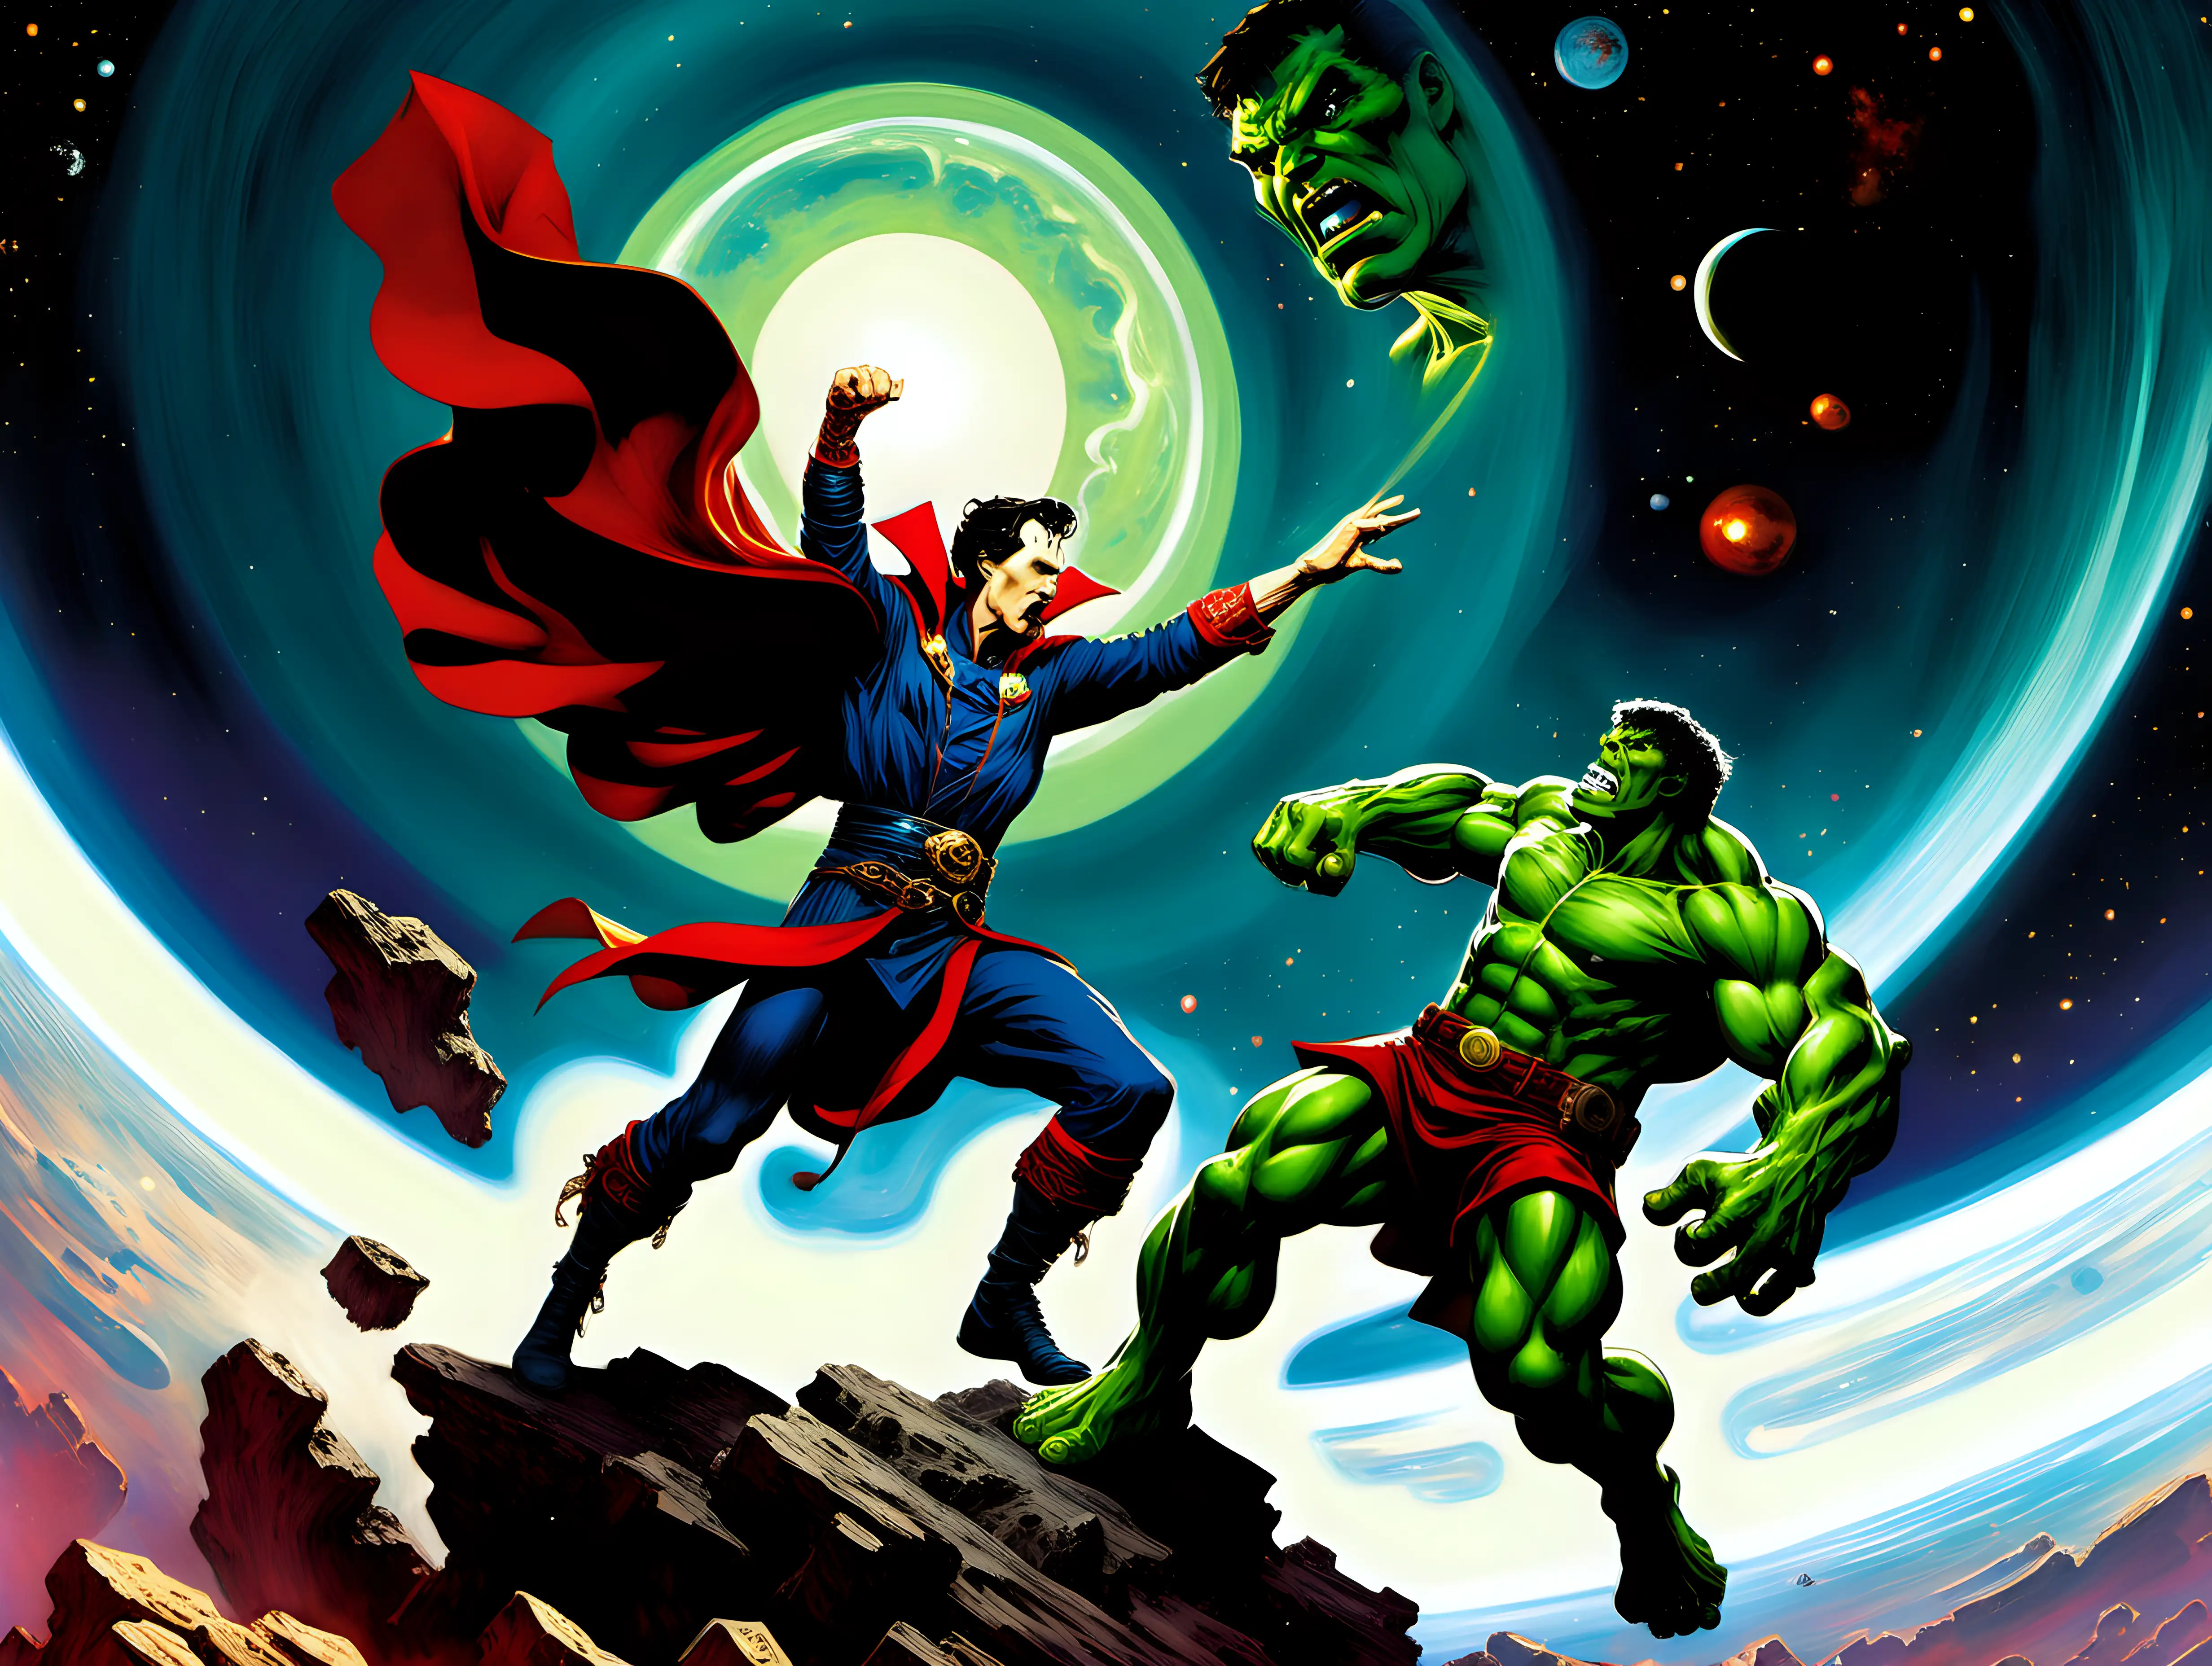 Intergalactic Battle Doctor Strange vs The Hulk in Epic Frank Frazetta Style